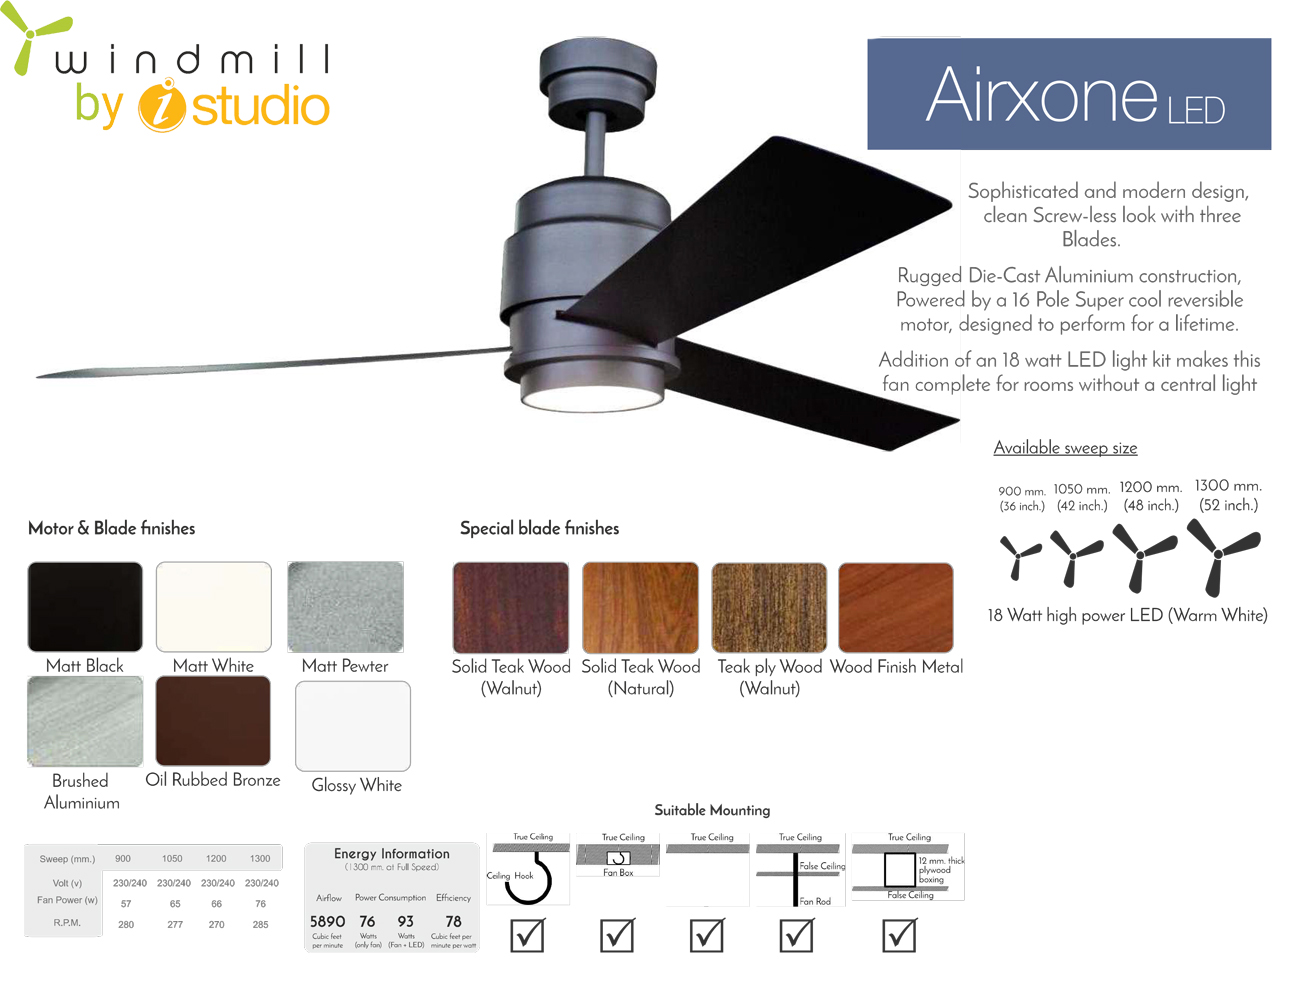 Windmill Airxone LED 42